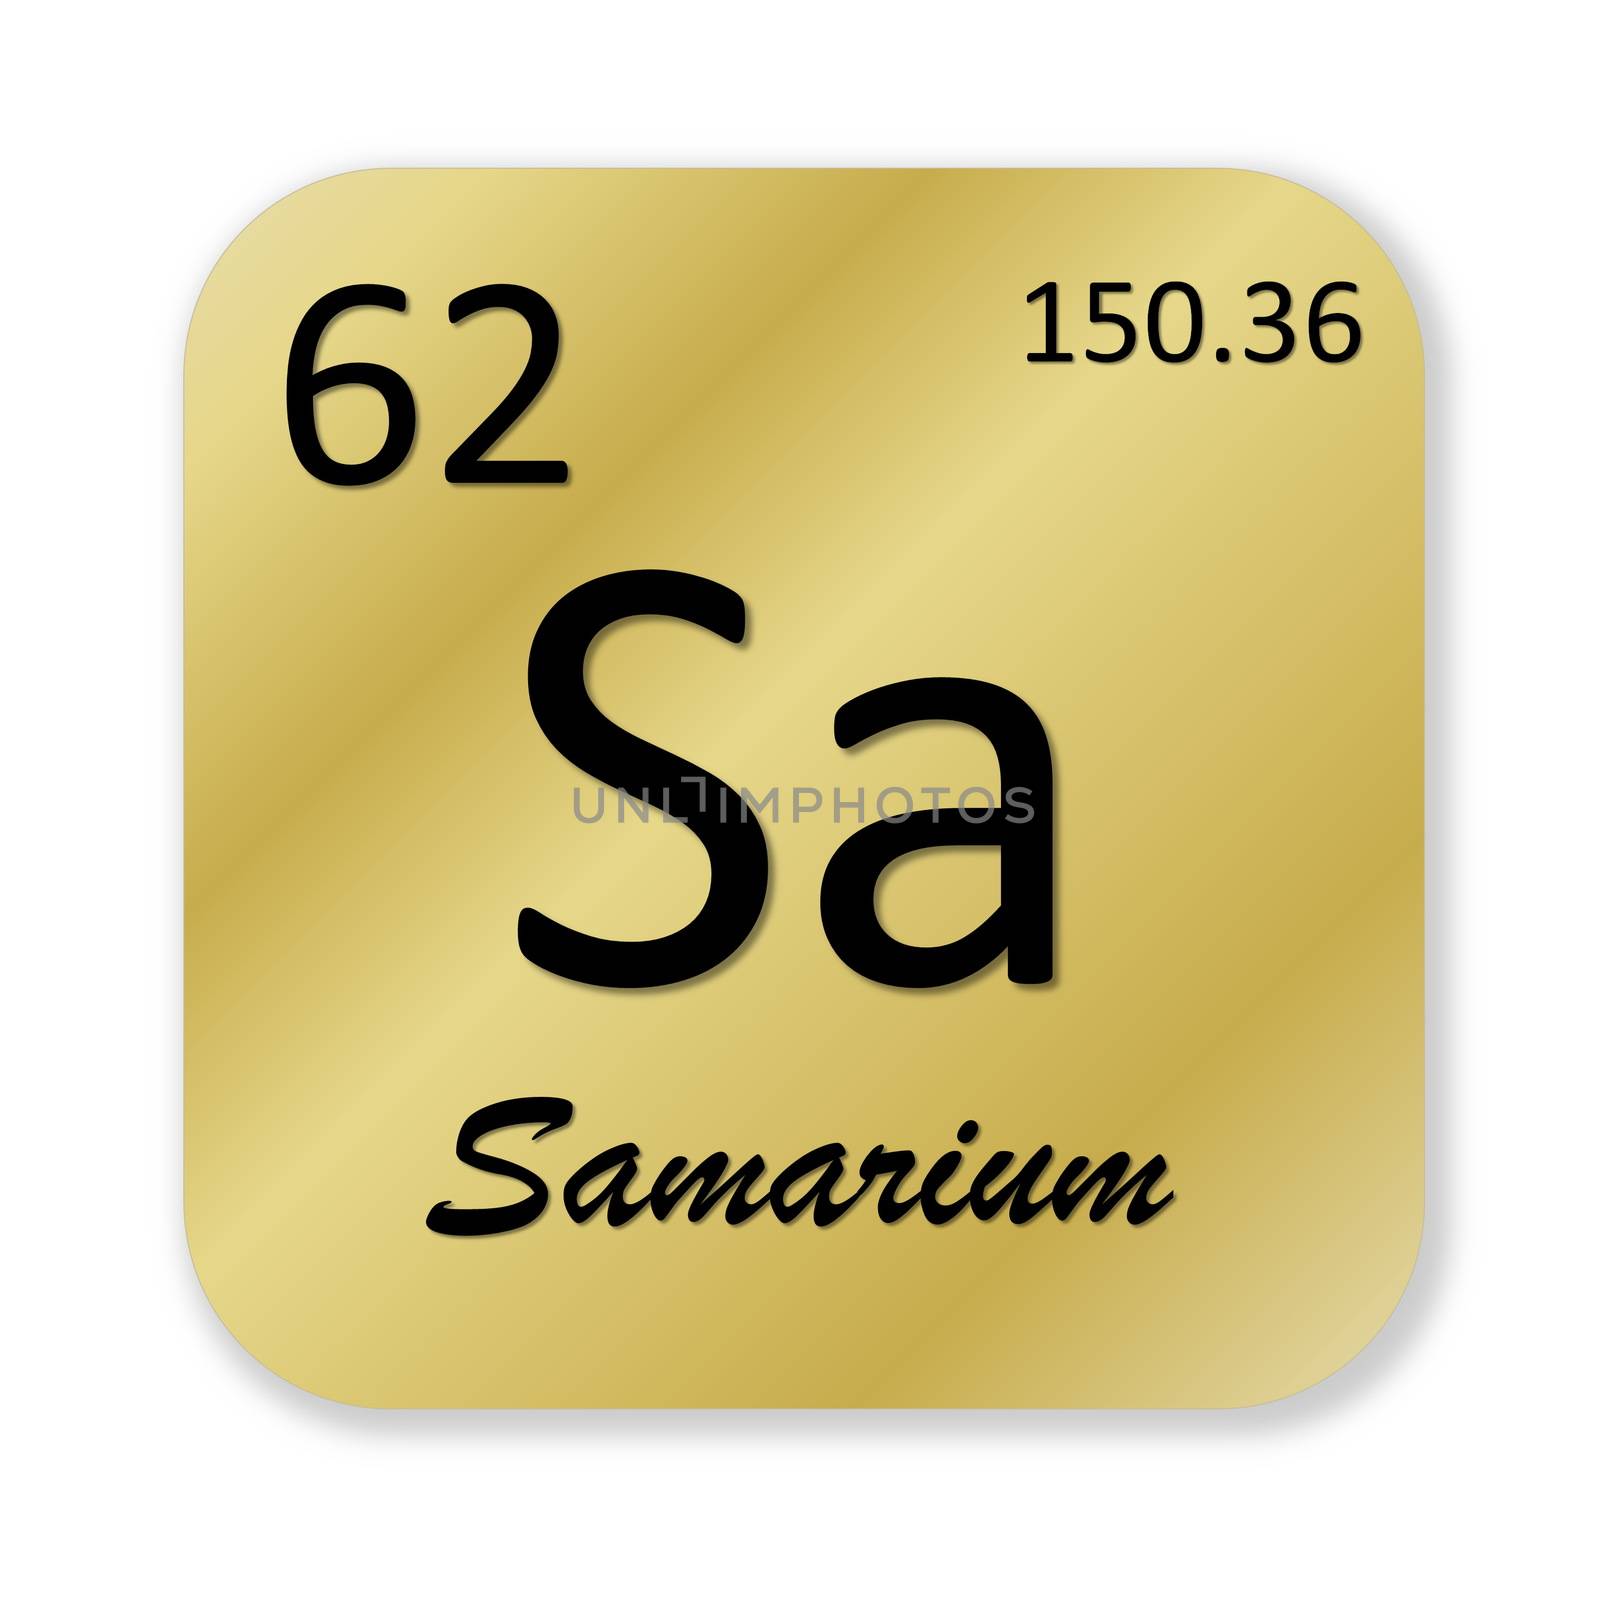 Black samarium element into golden square shape isolated in white background